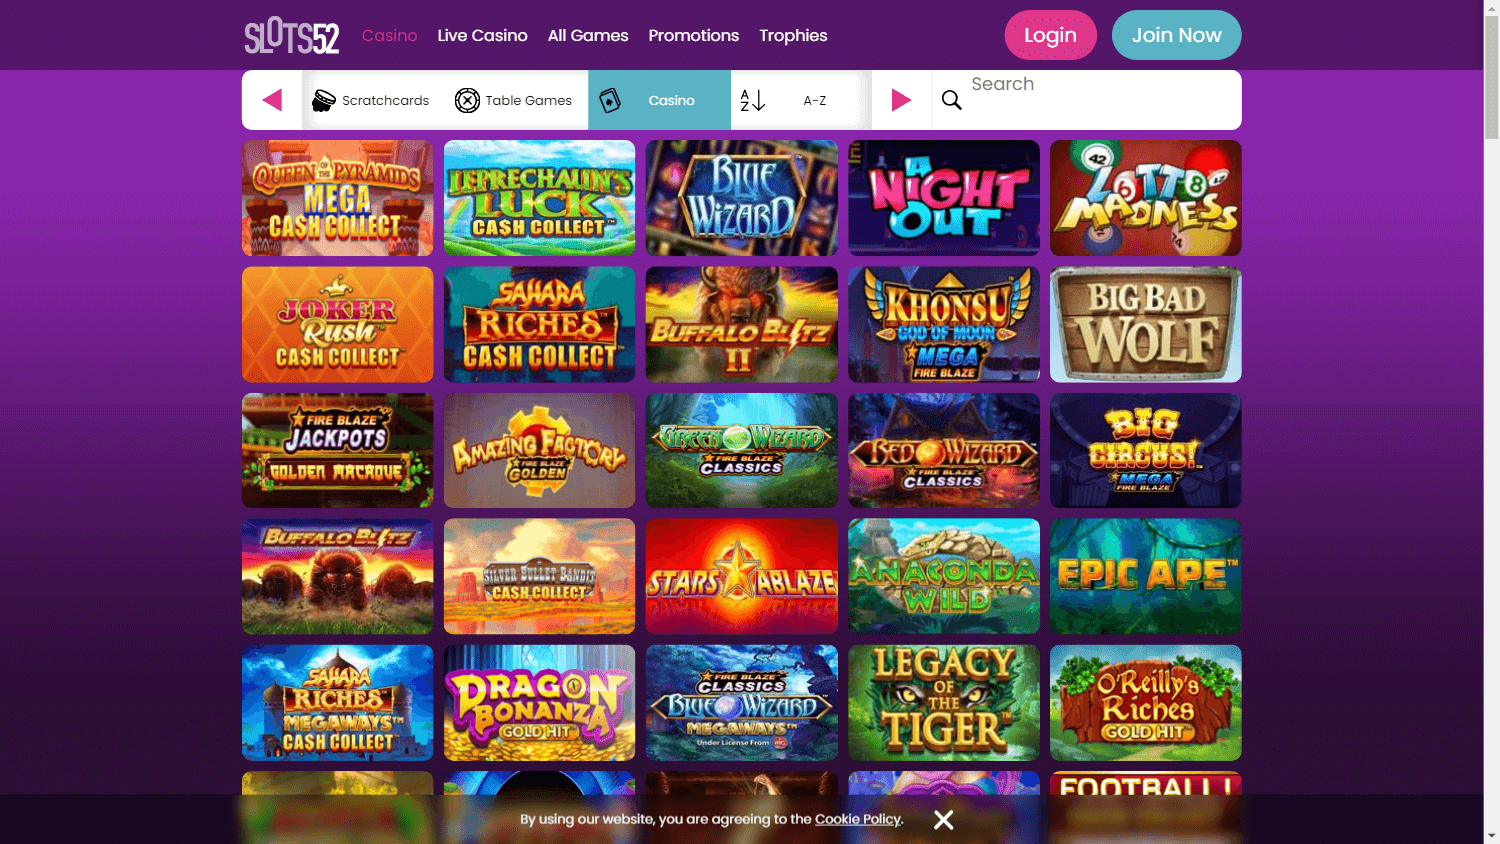 slots52_casino_homepage_desktop